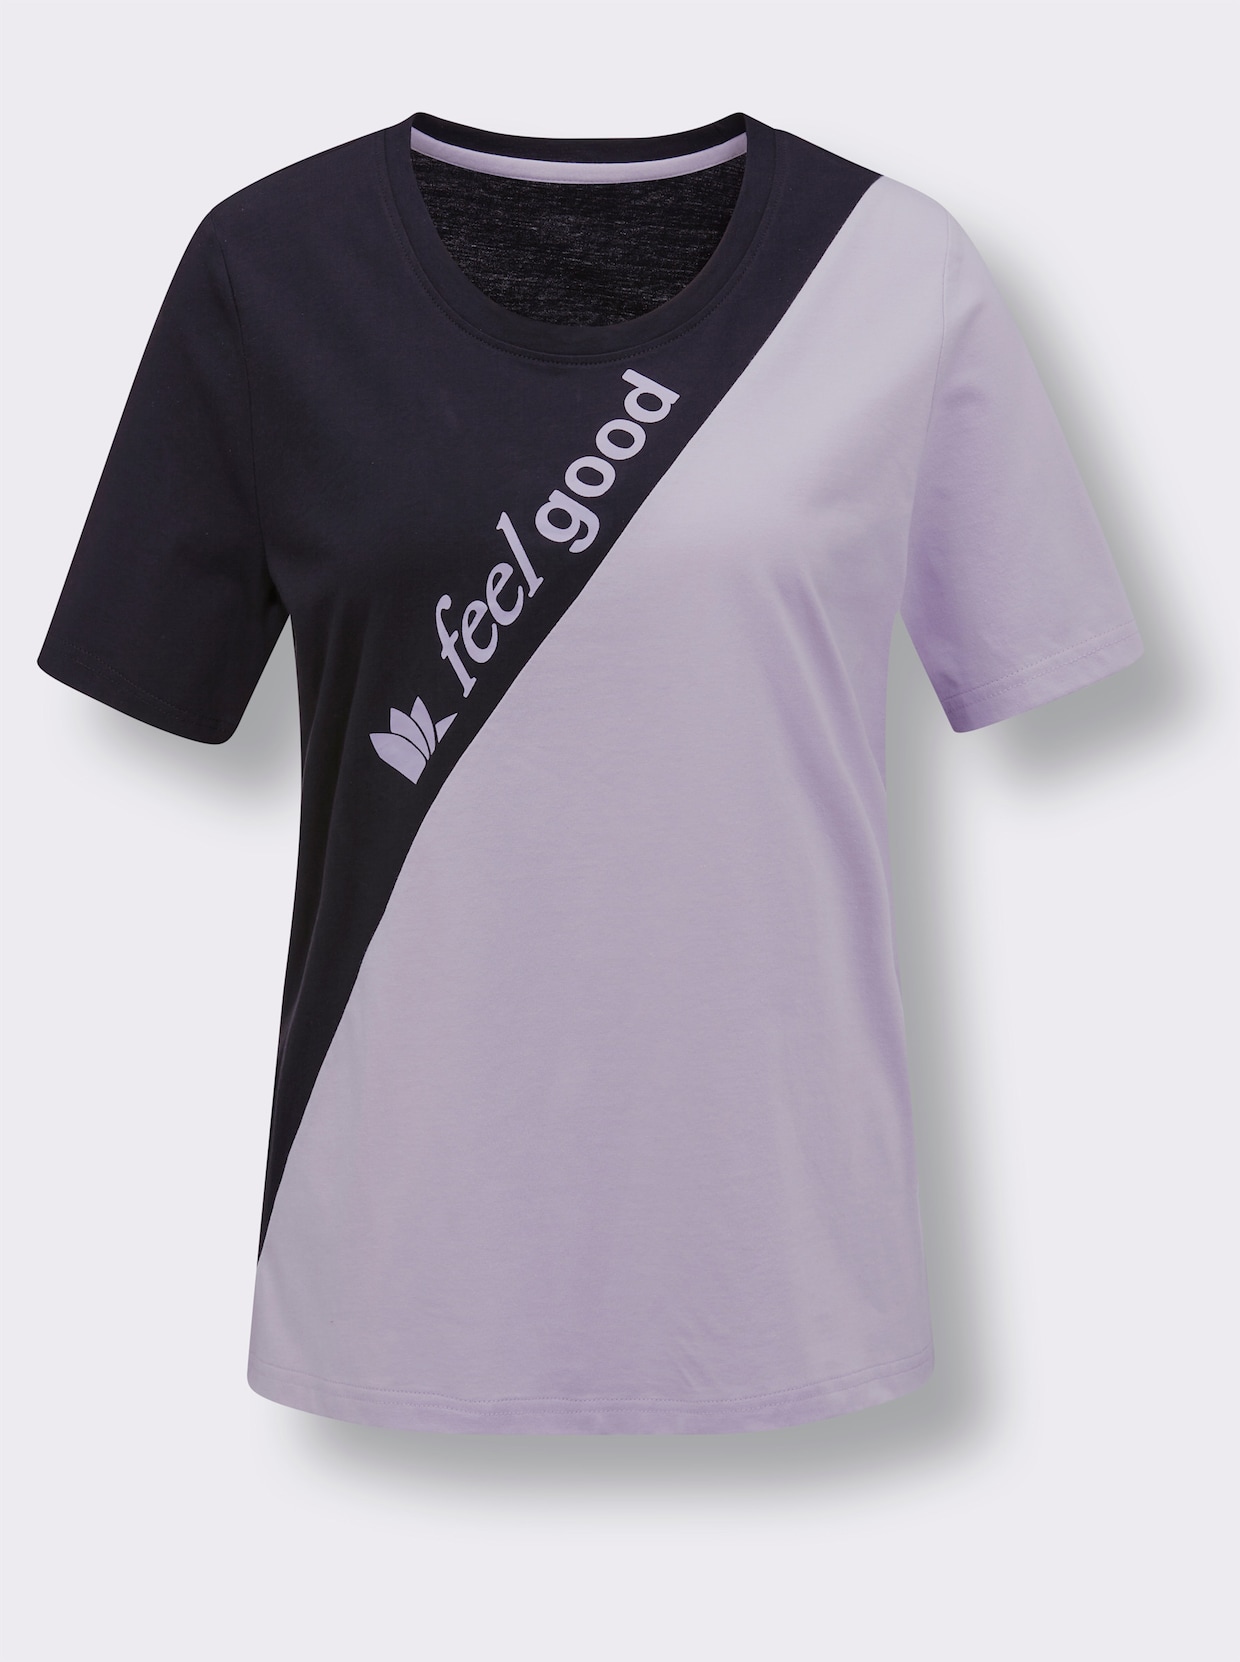 feel good Shirt - schwarz-flieder